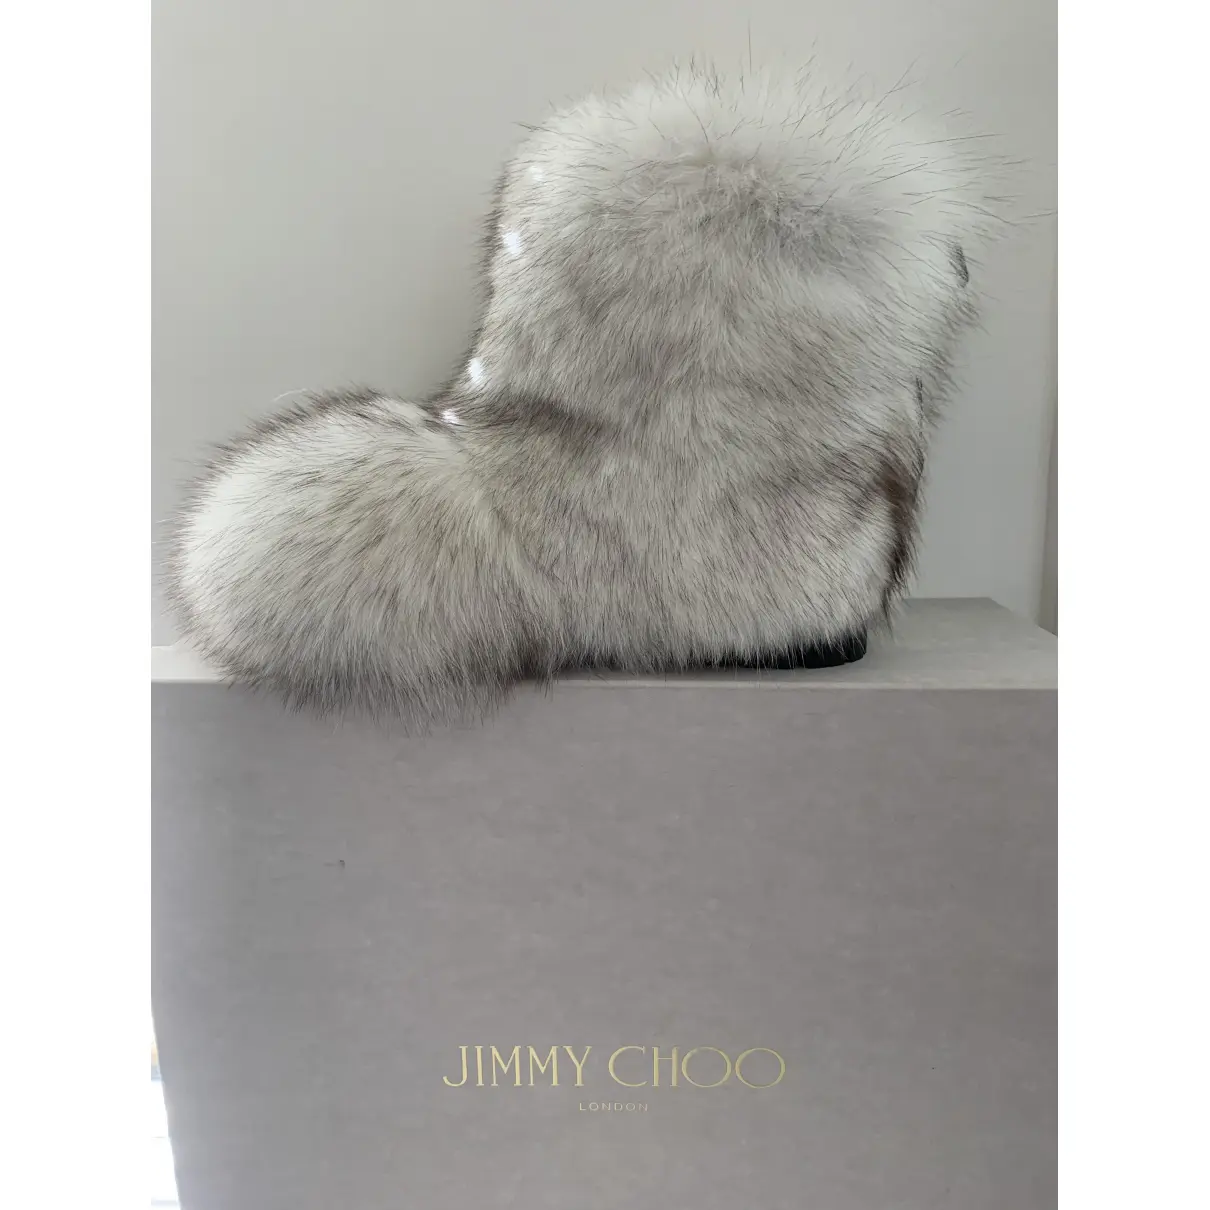 Rabbit snow boots Jimmy Choo